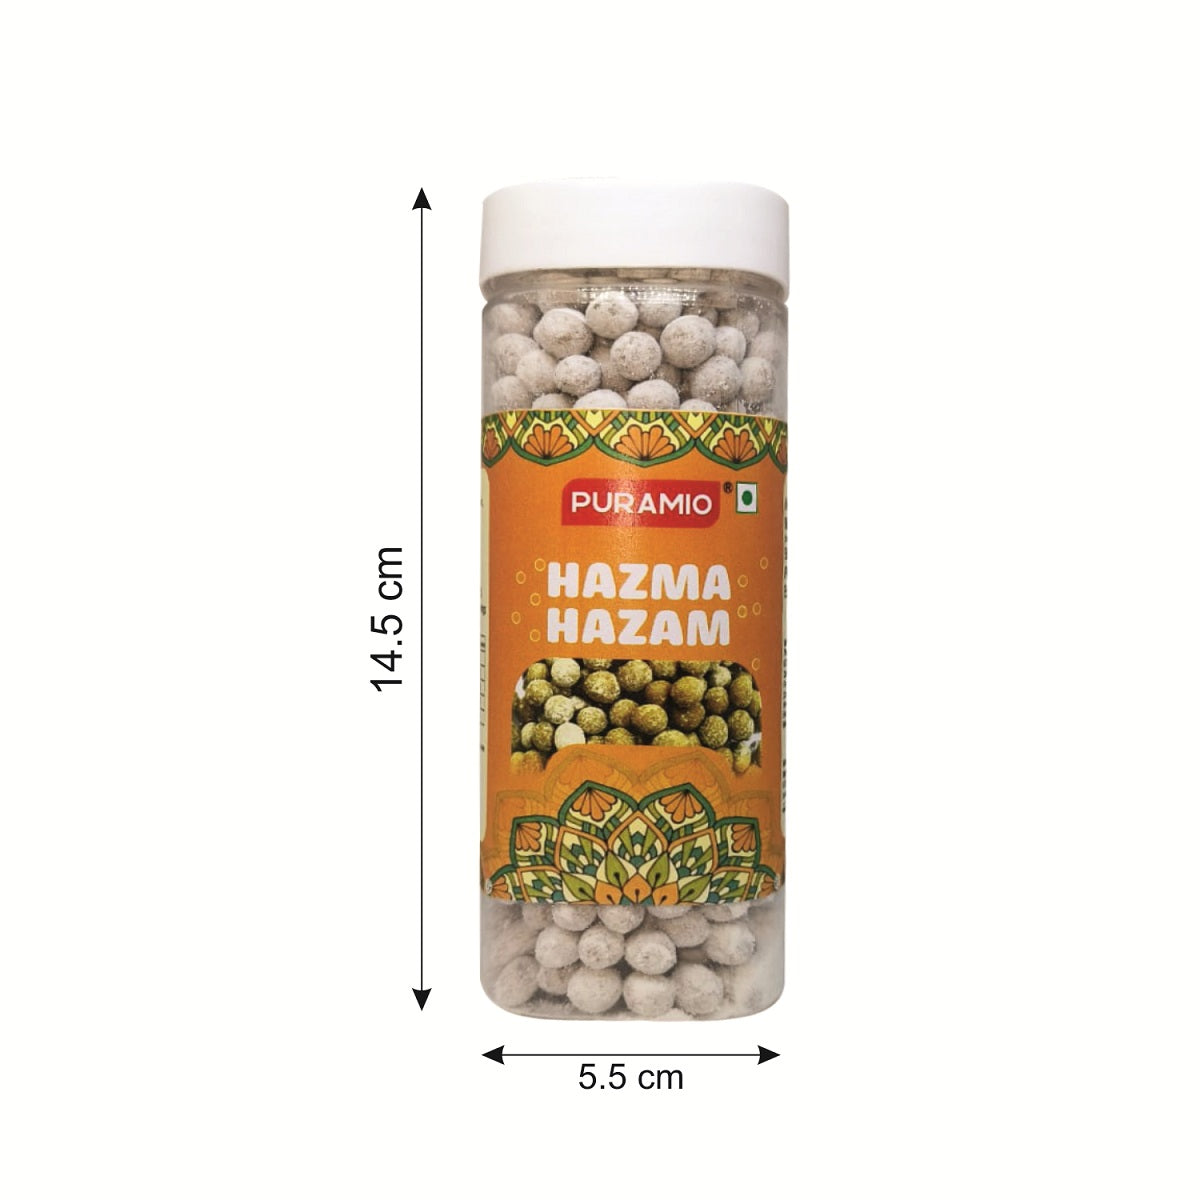 Puramio Hazma Hazam | Pure and Premium | Good for Digestion | After Meal Digestive Mouth Freshner, 220g